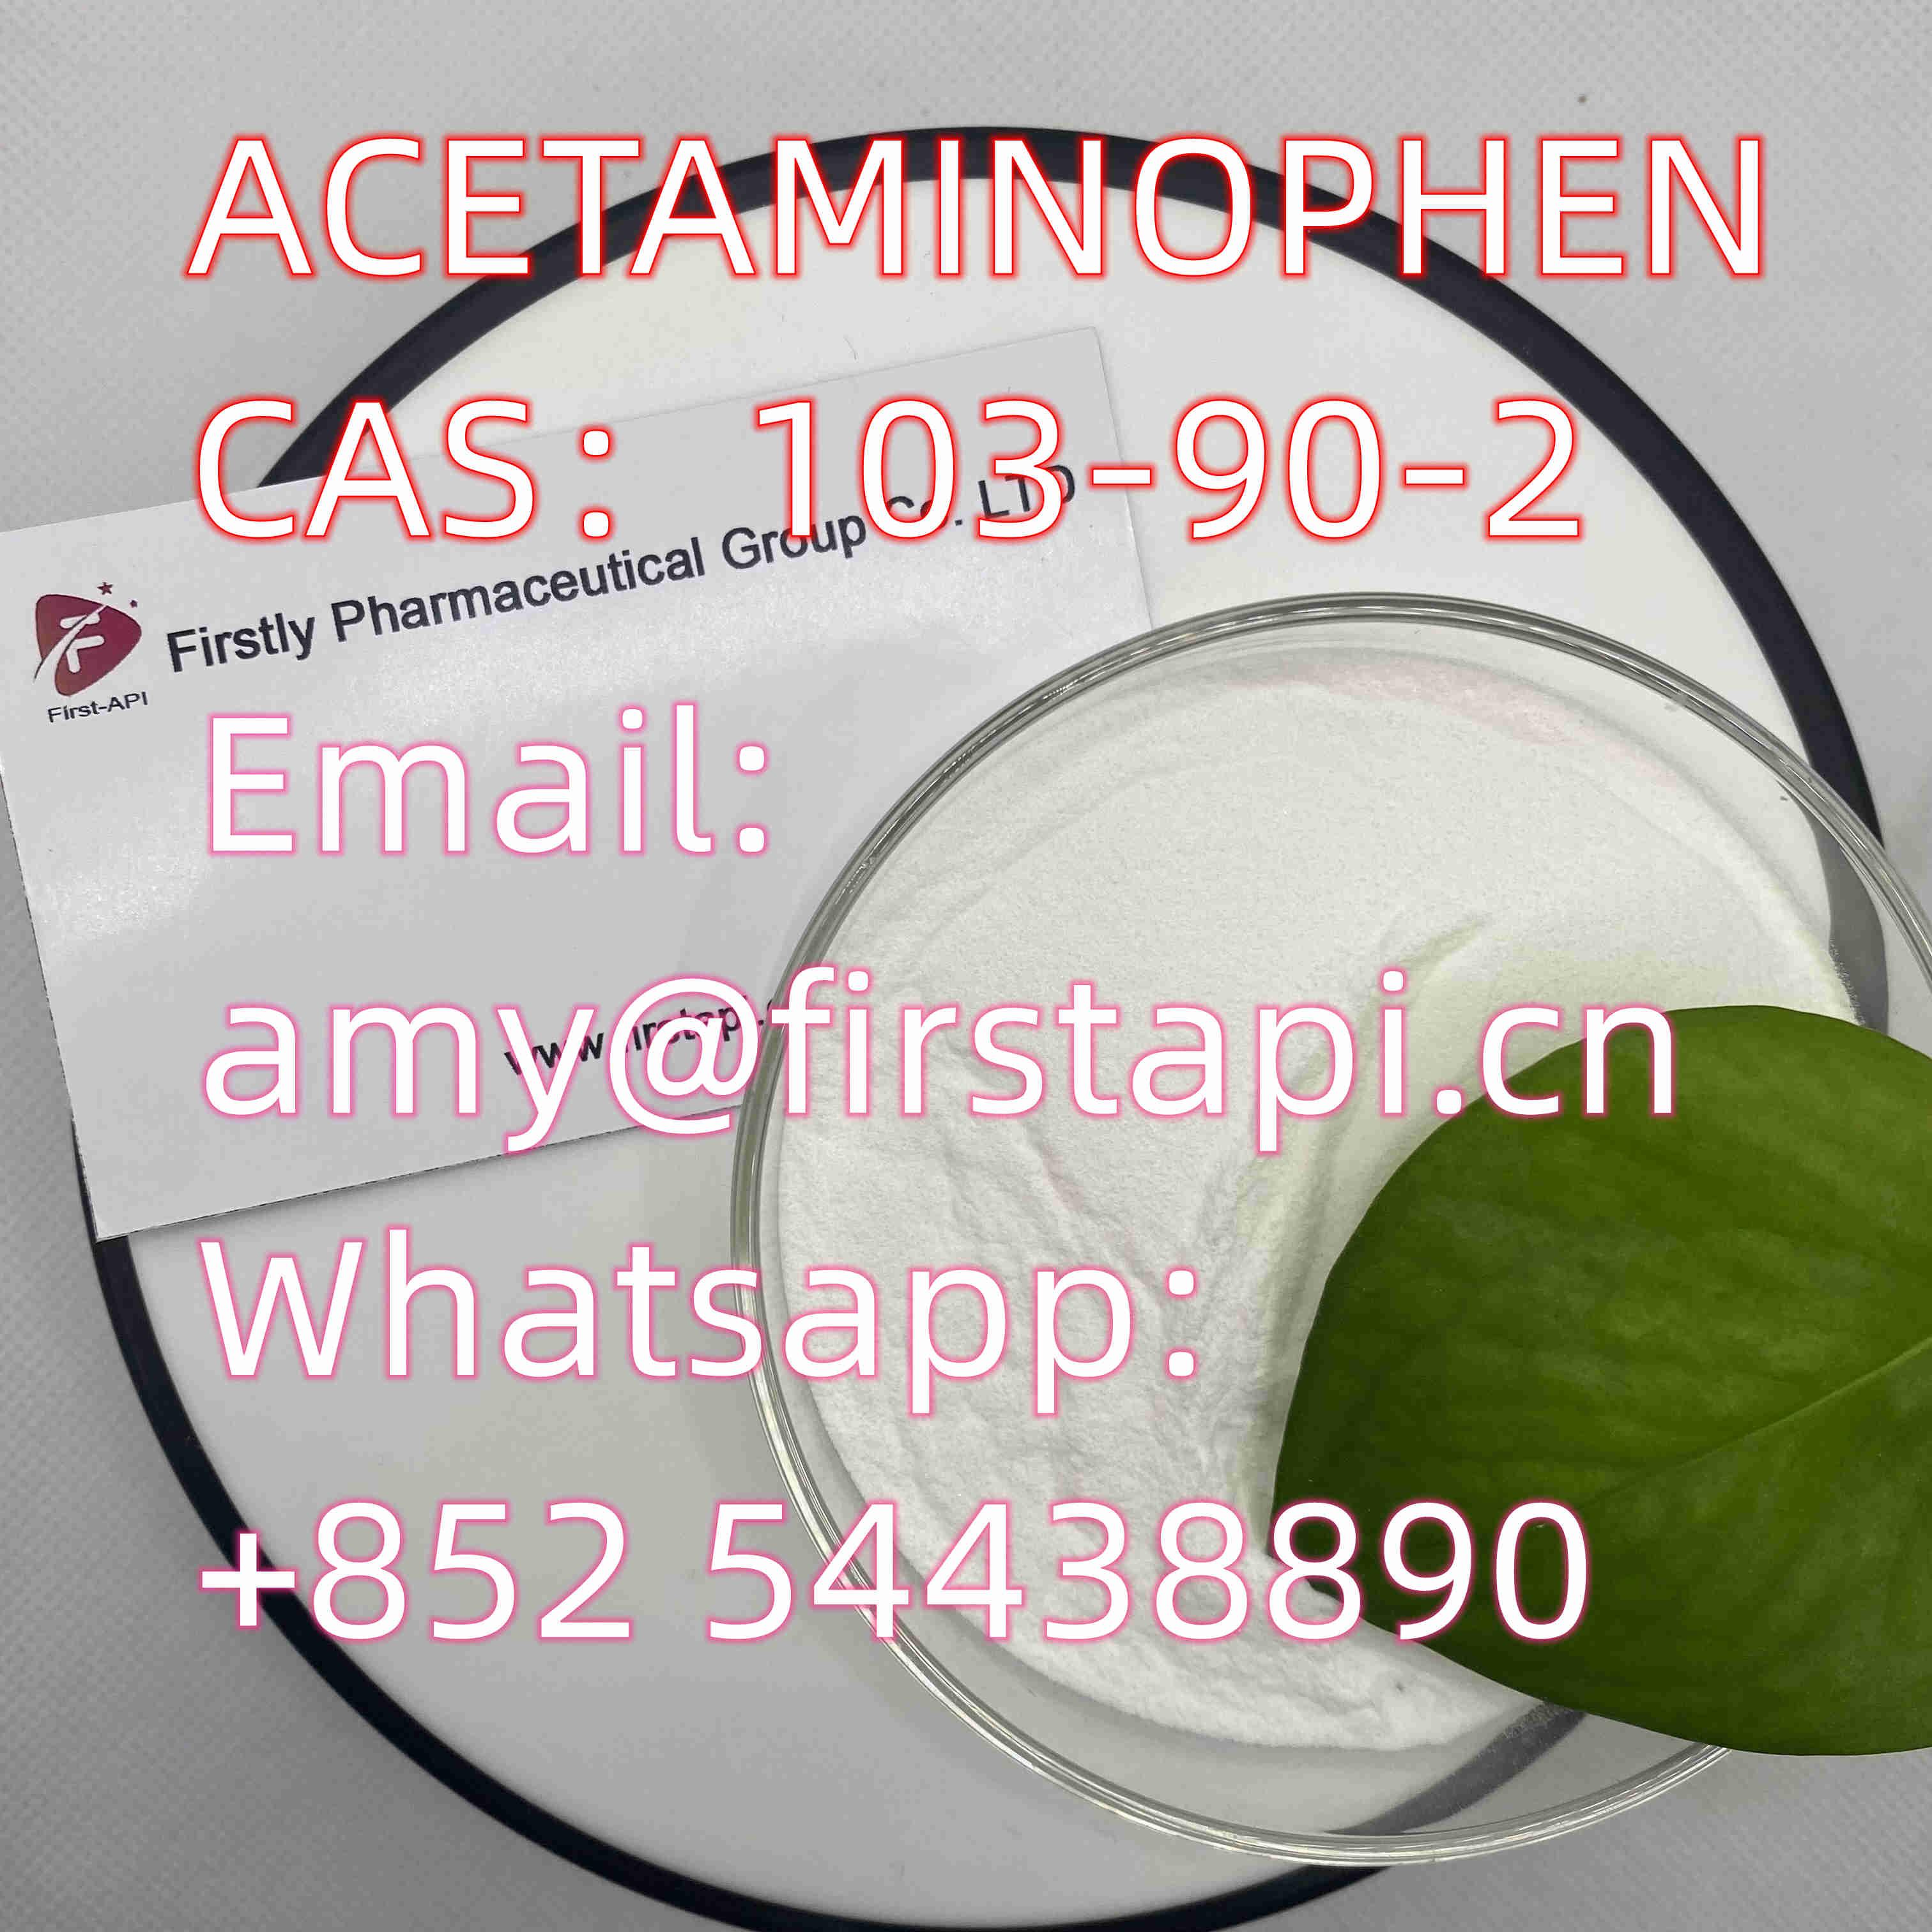 ACETAMINOPHEN  CAS:103-90-2  Whatsapp:+852 54438890 - photo